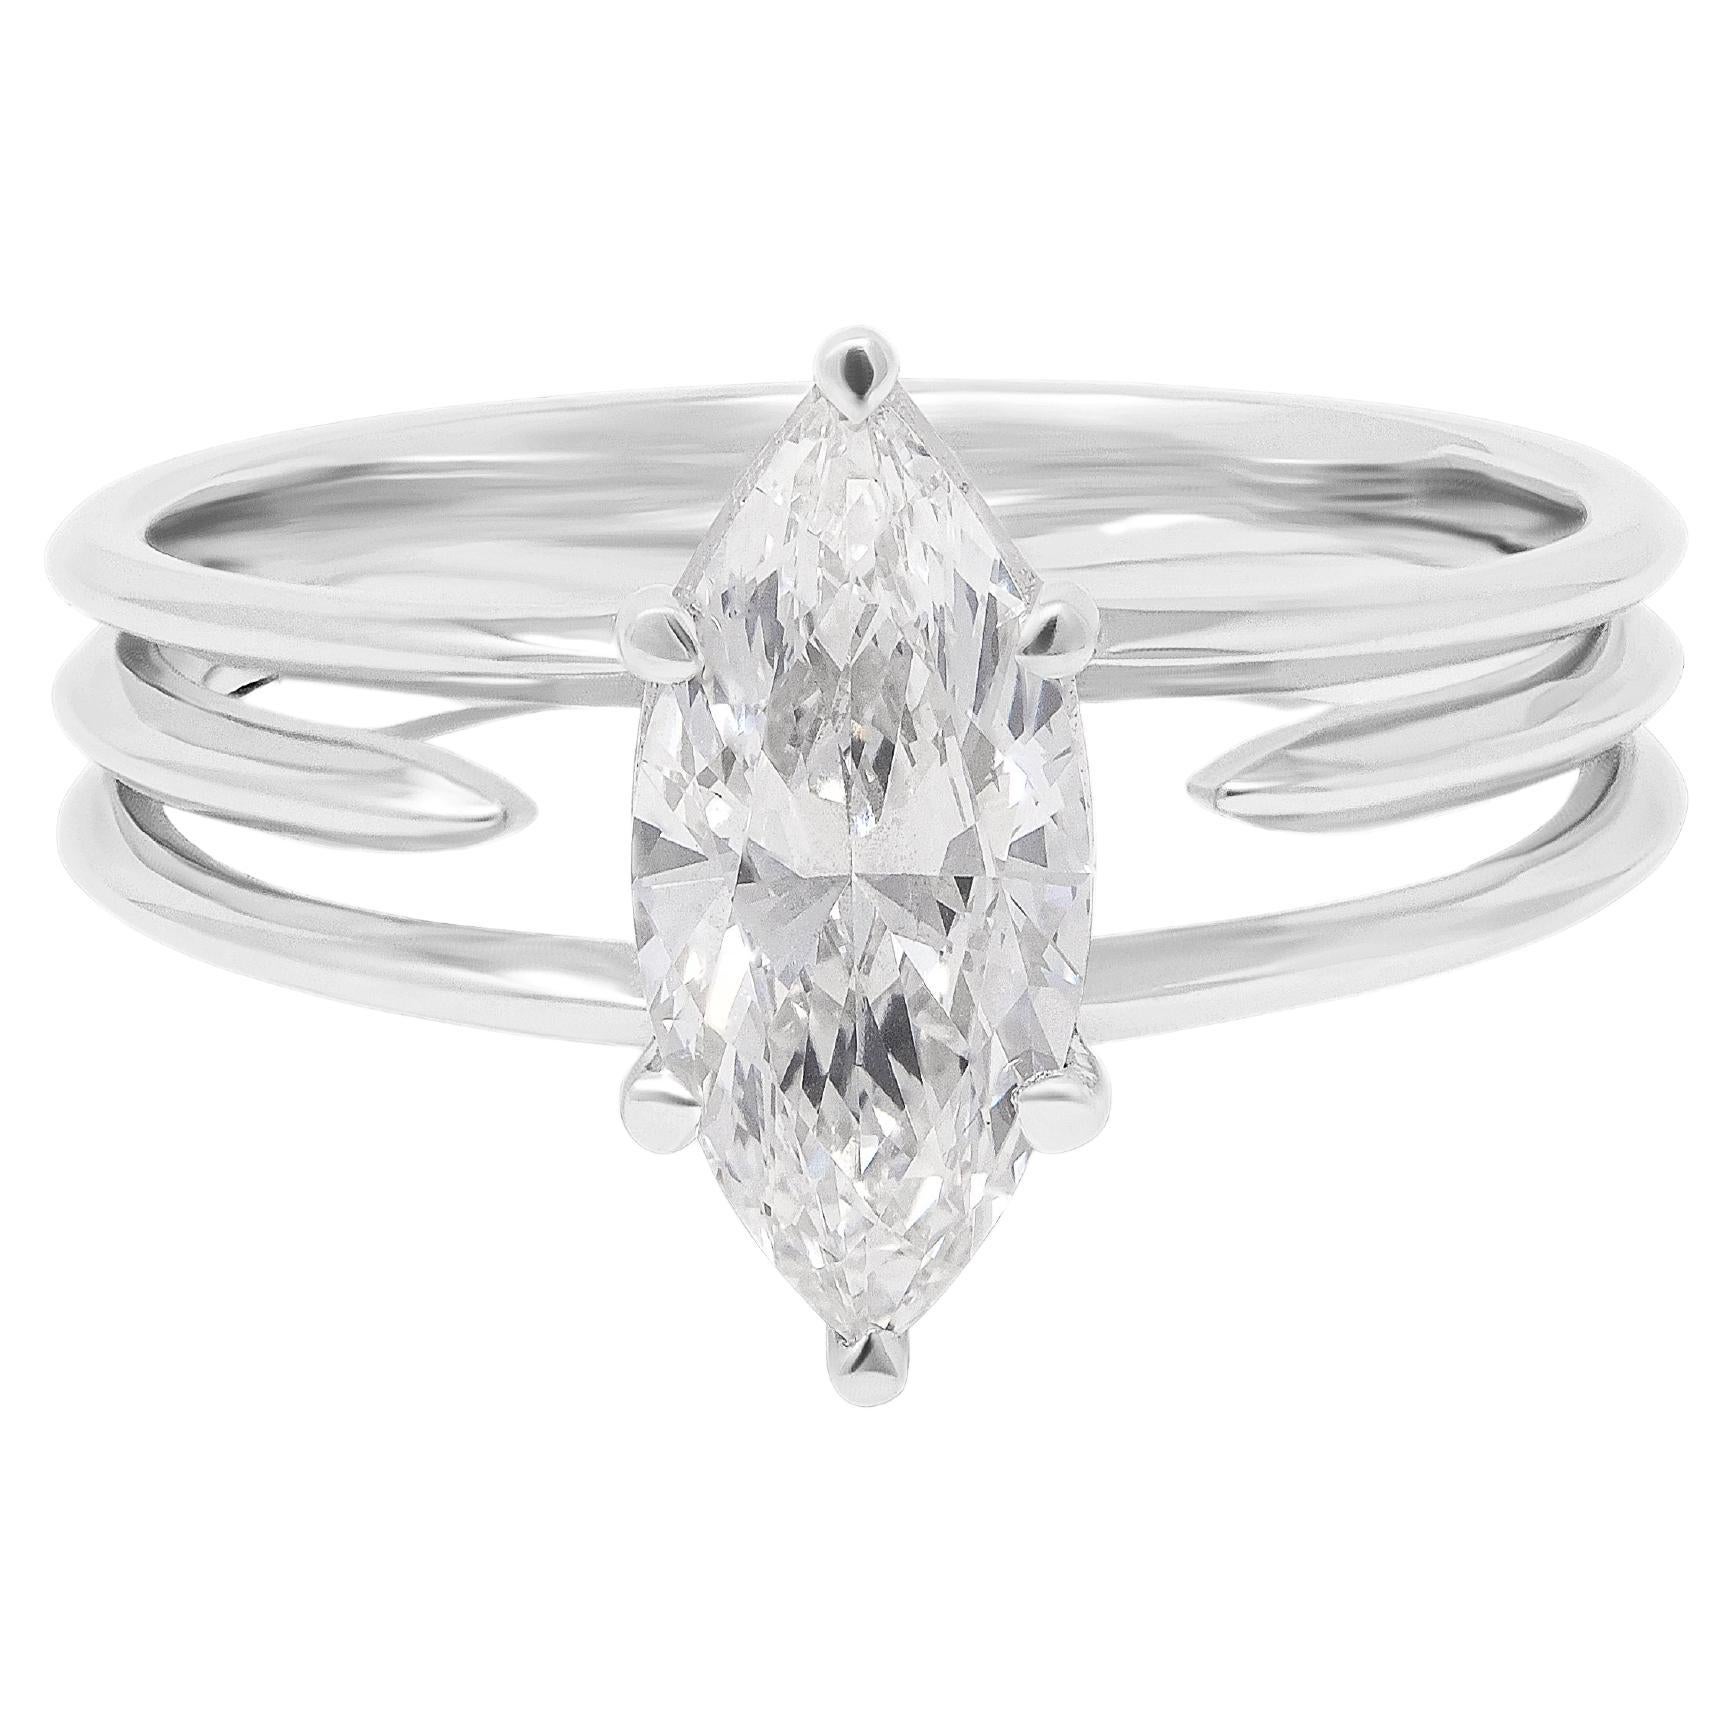 1.22 Carat GIA Certified Marquise Cut Diamond Platinum Architectural Ring